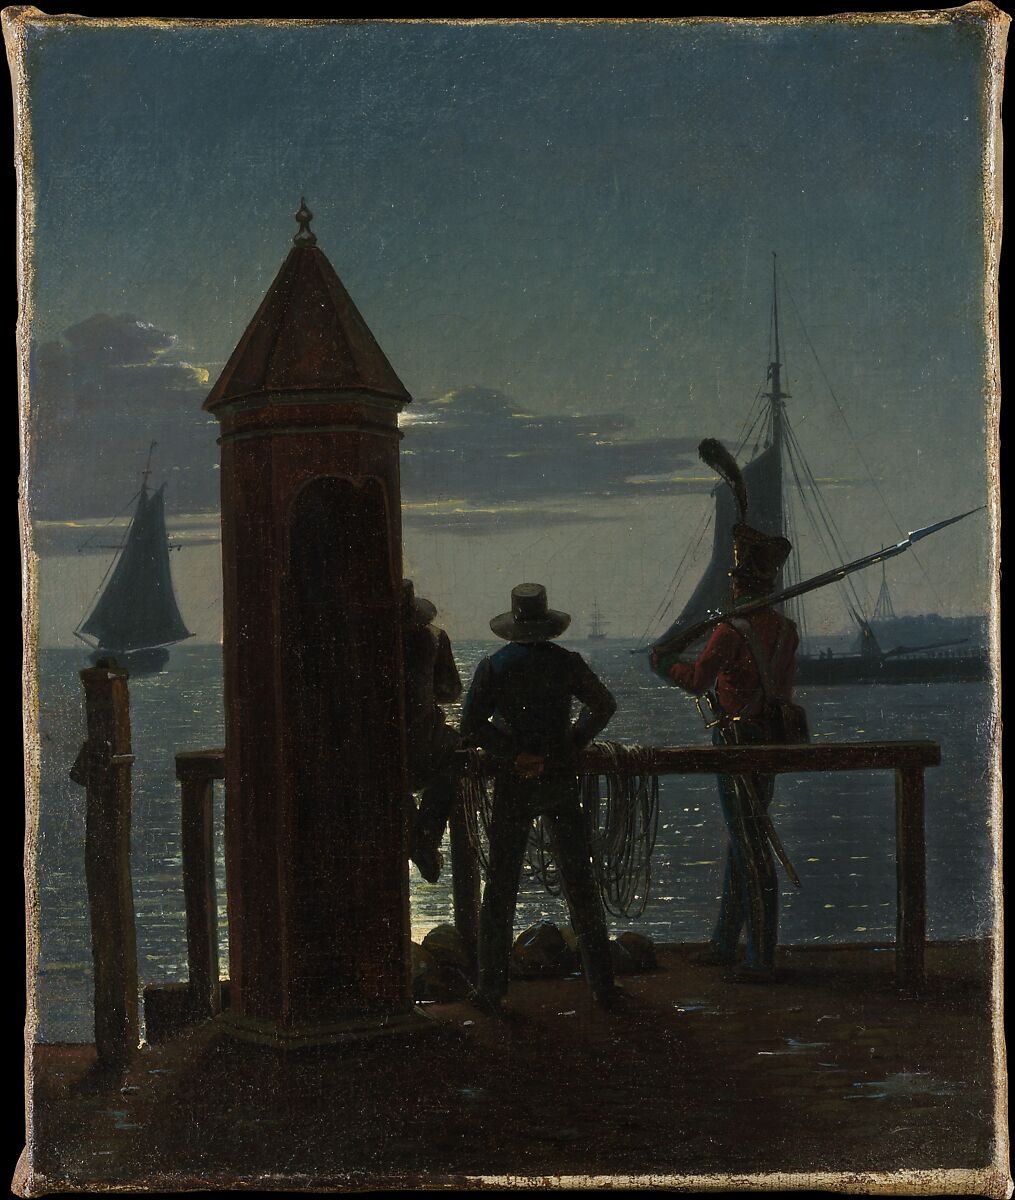 Martinus Rørbye. View from the Citadel Ramparts in Copenhagen by Moonlight, 1839